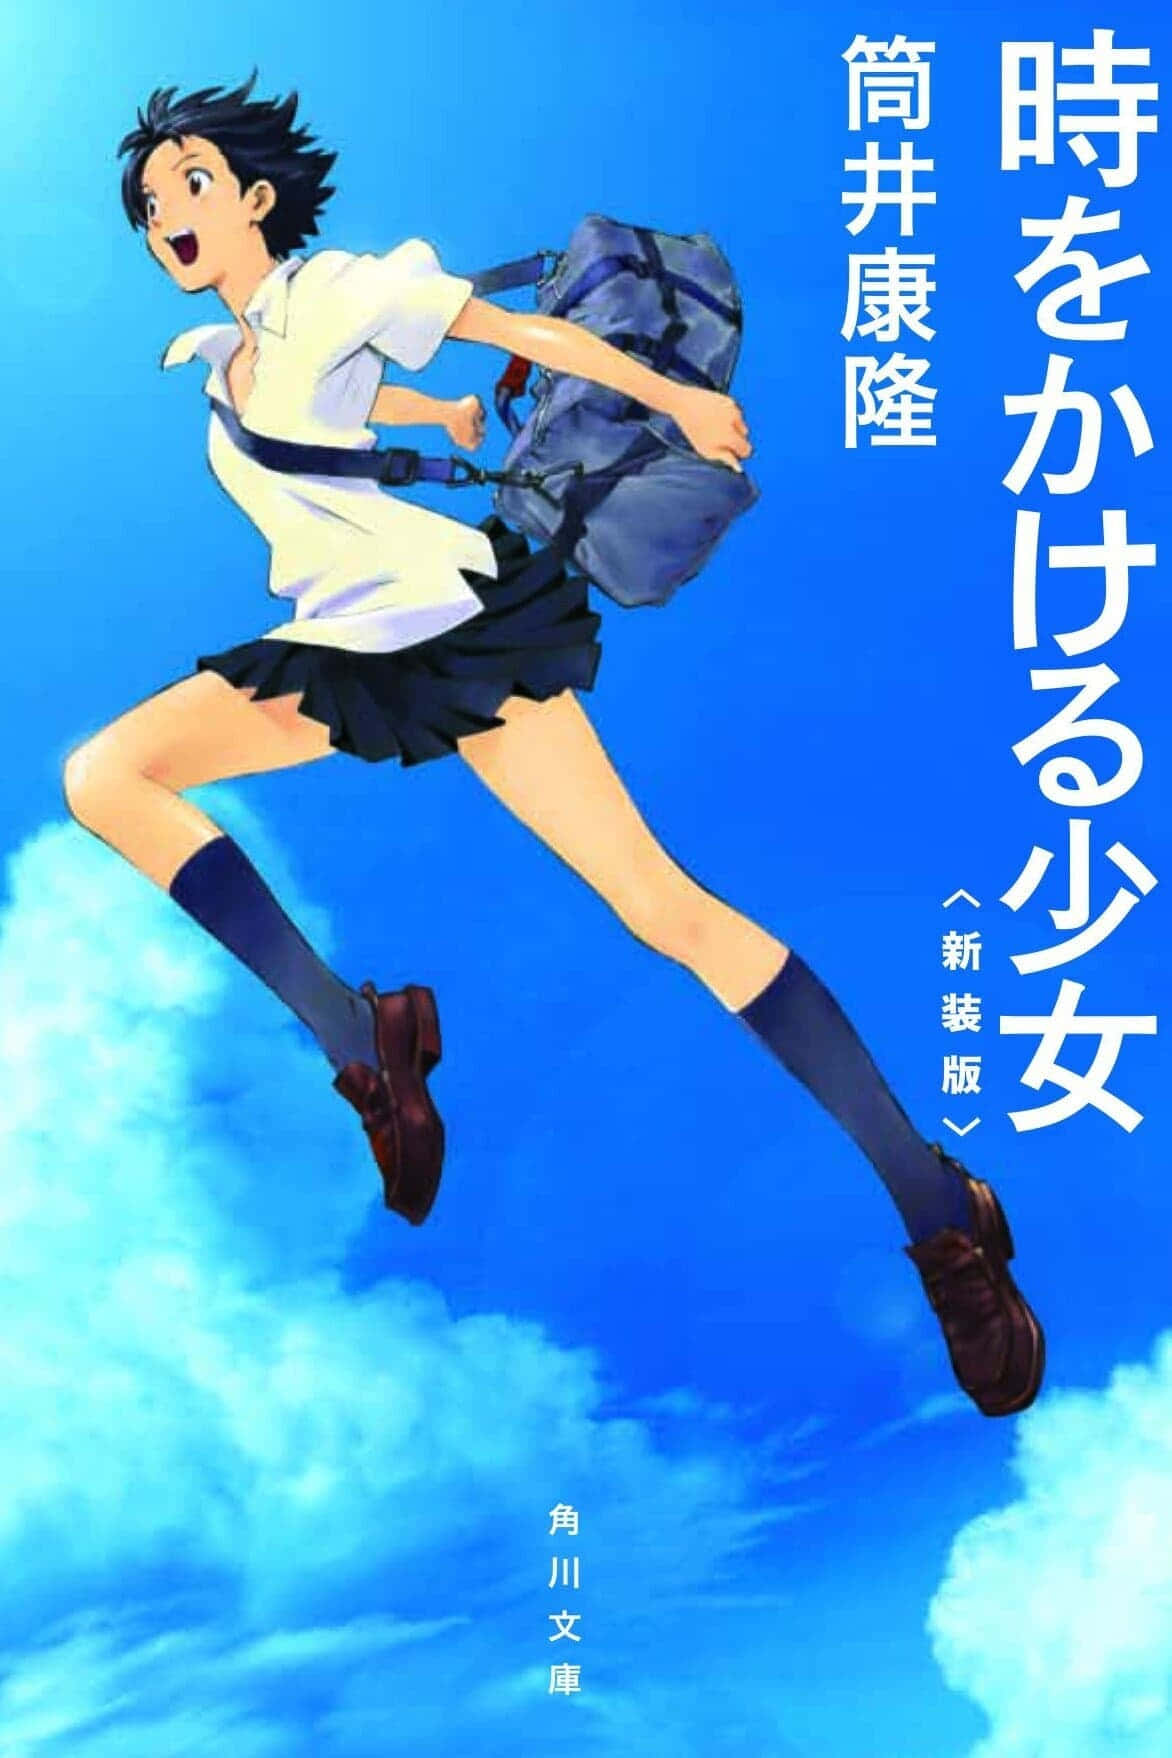 Makoto Konno's Leap of Faith Wallpaper